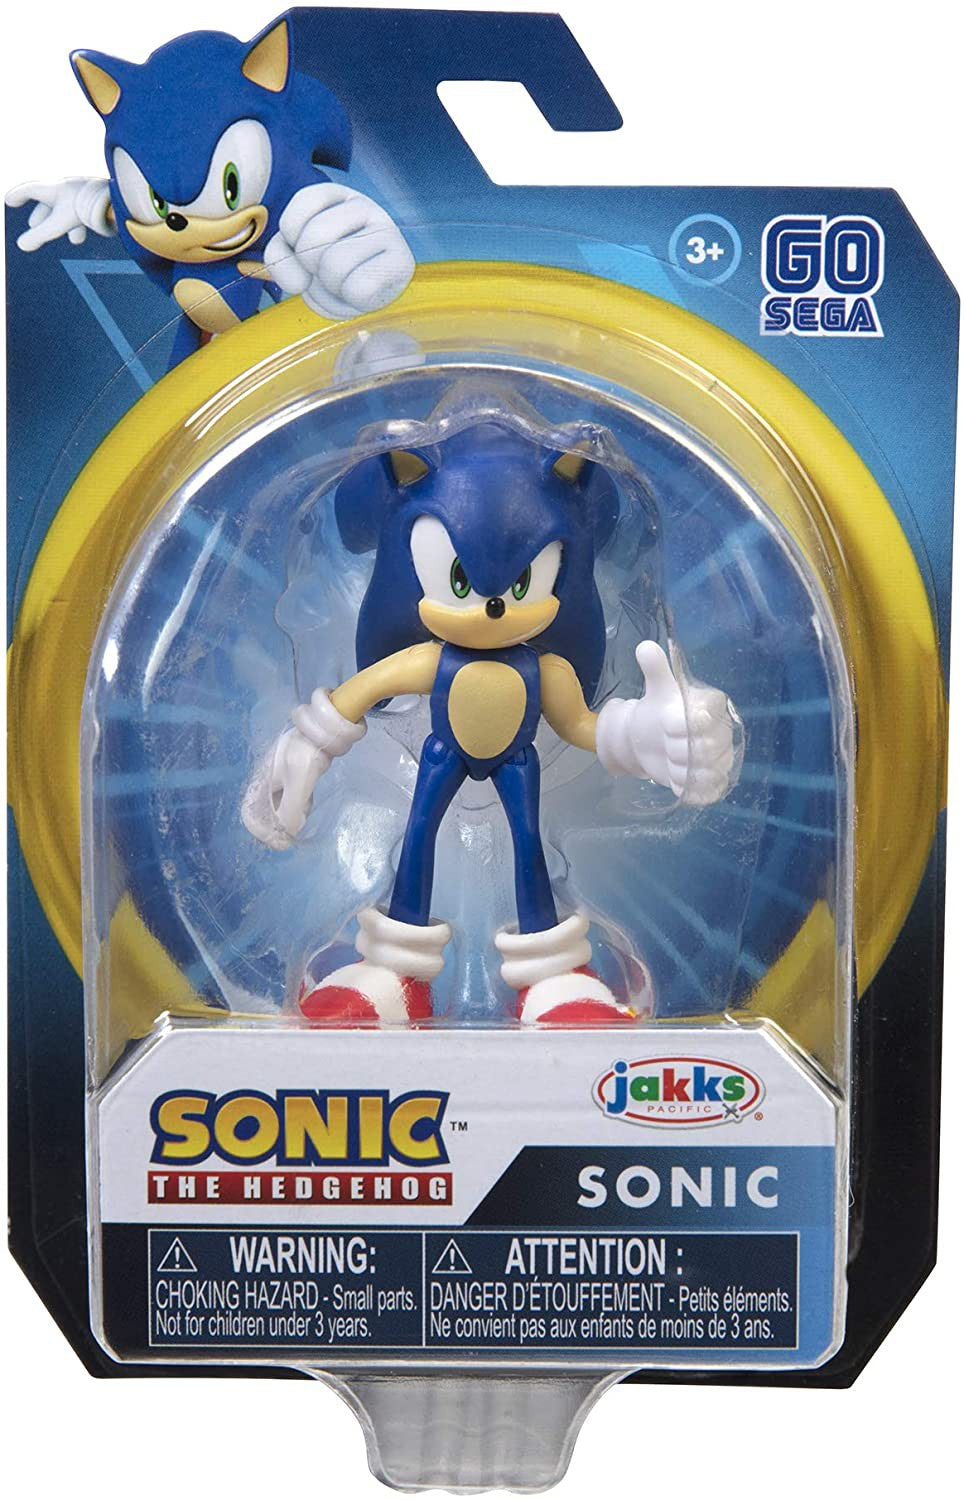 Sonic The Hedgehog 2 1/2 inch figures